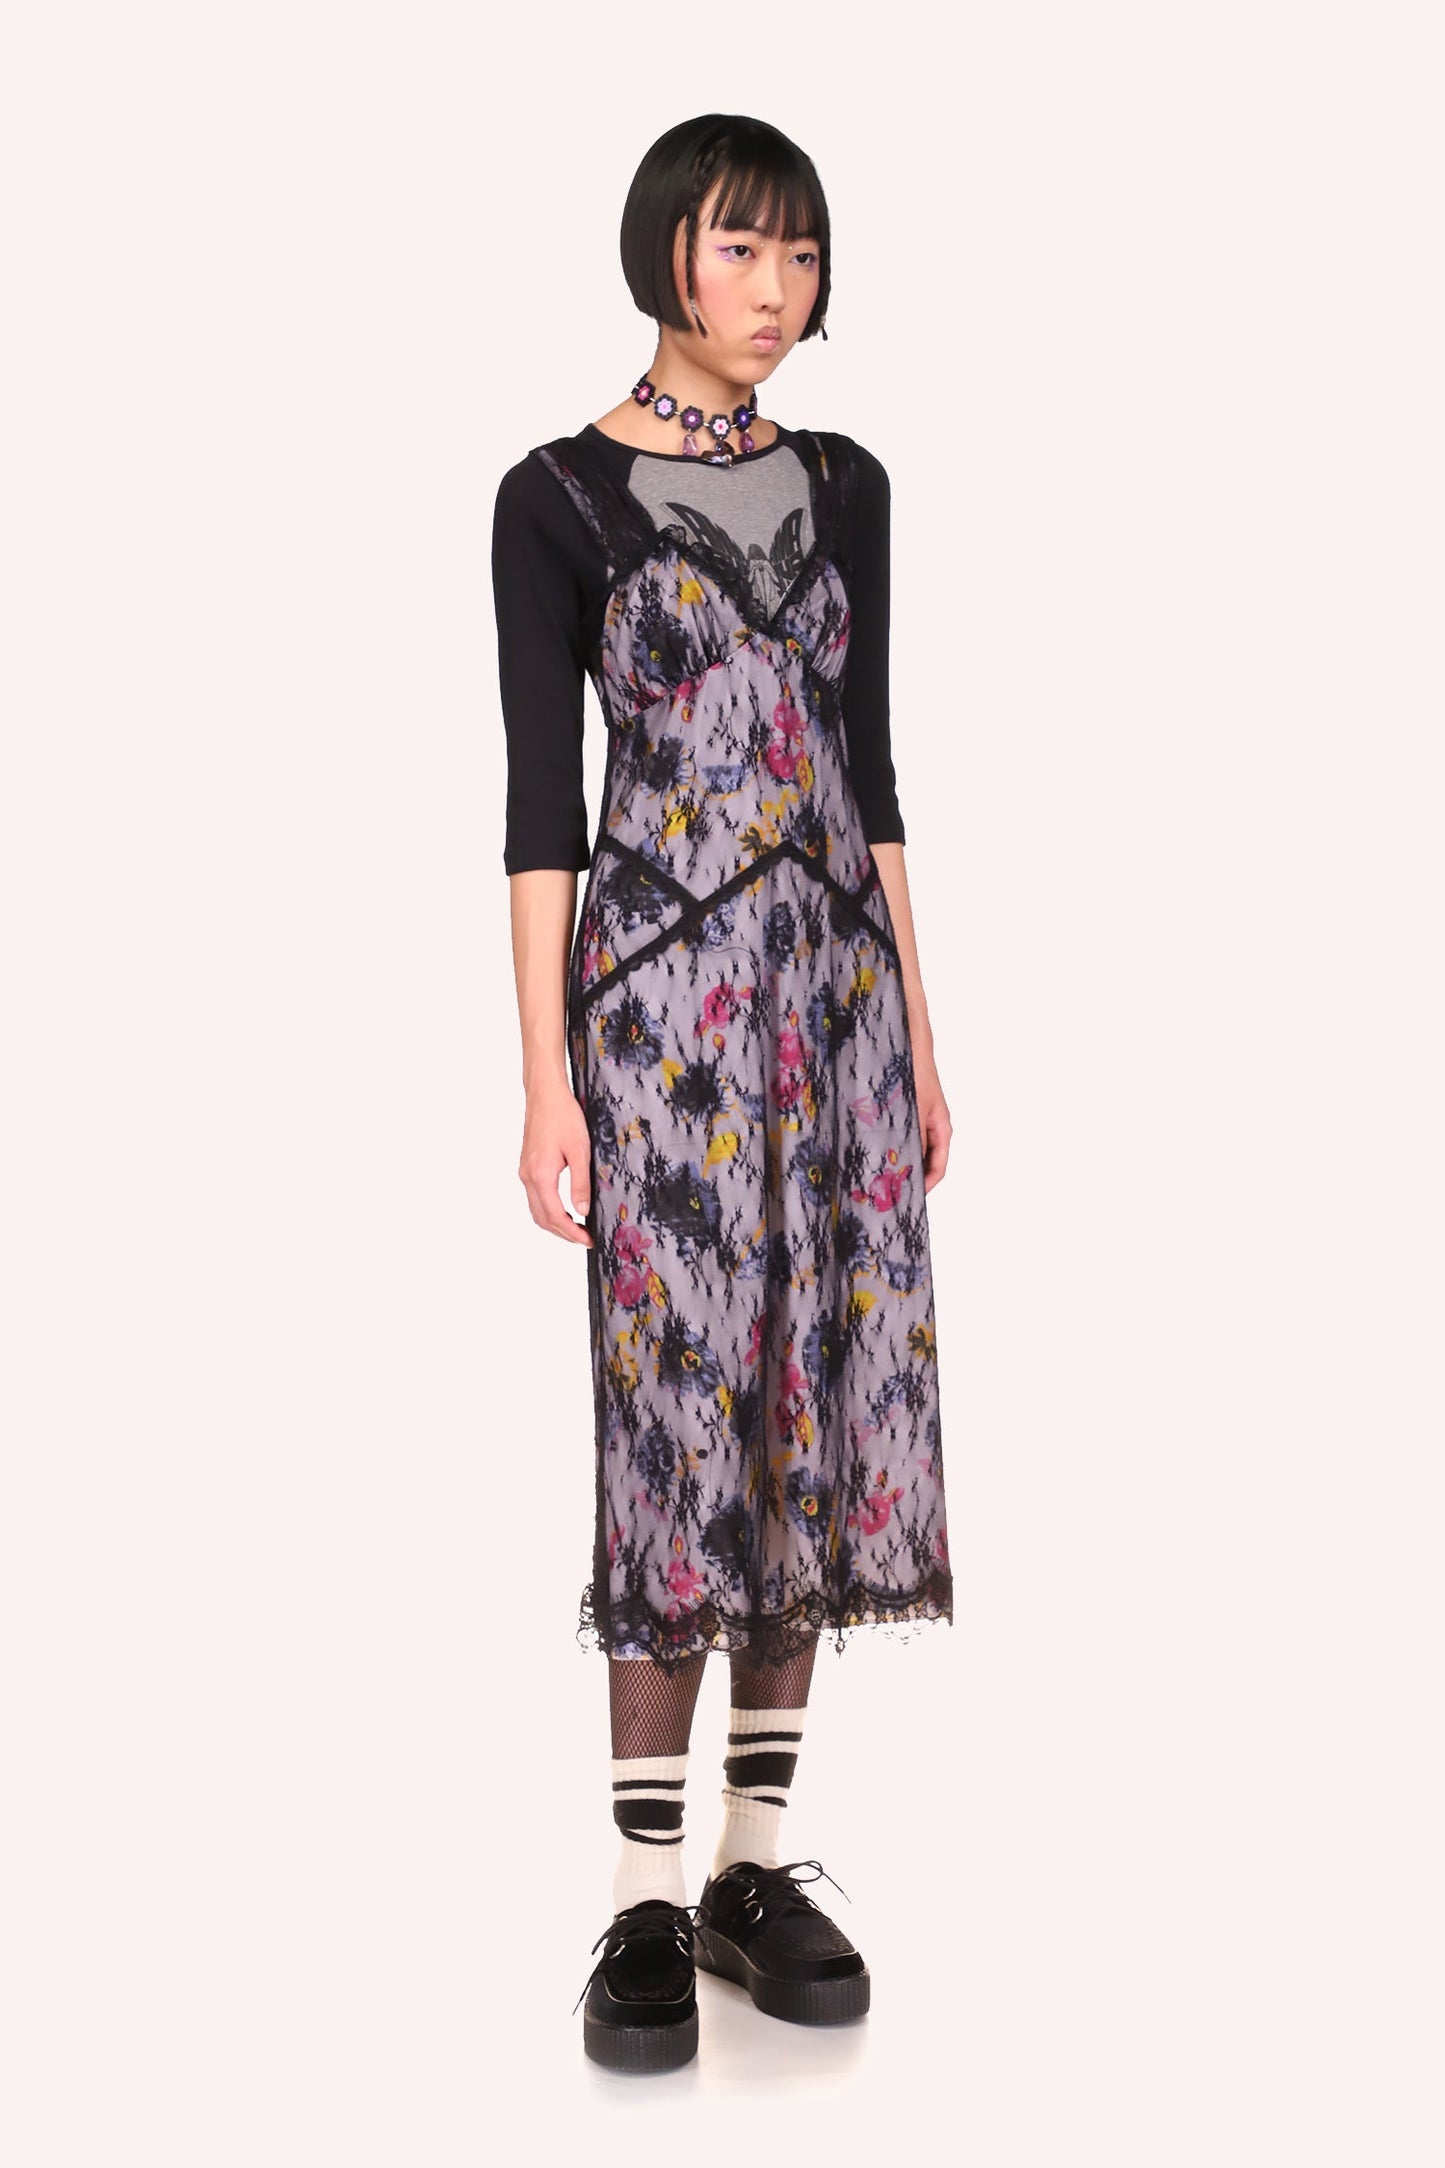 Slip Dress sleeveless, lilac, pink, yellow flowers, 2 straps, black hems on side, mid-legs long.